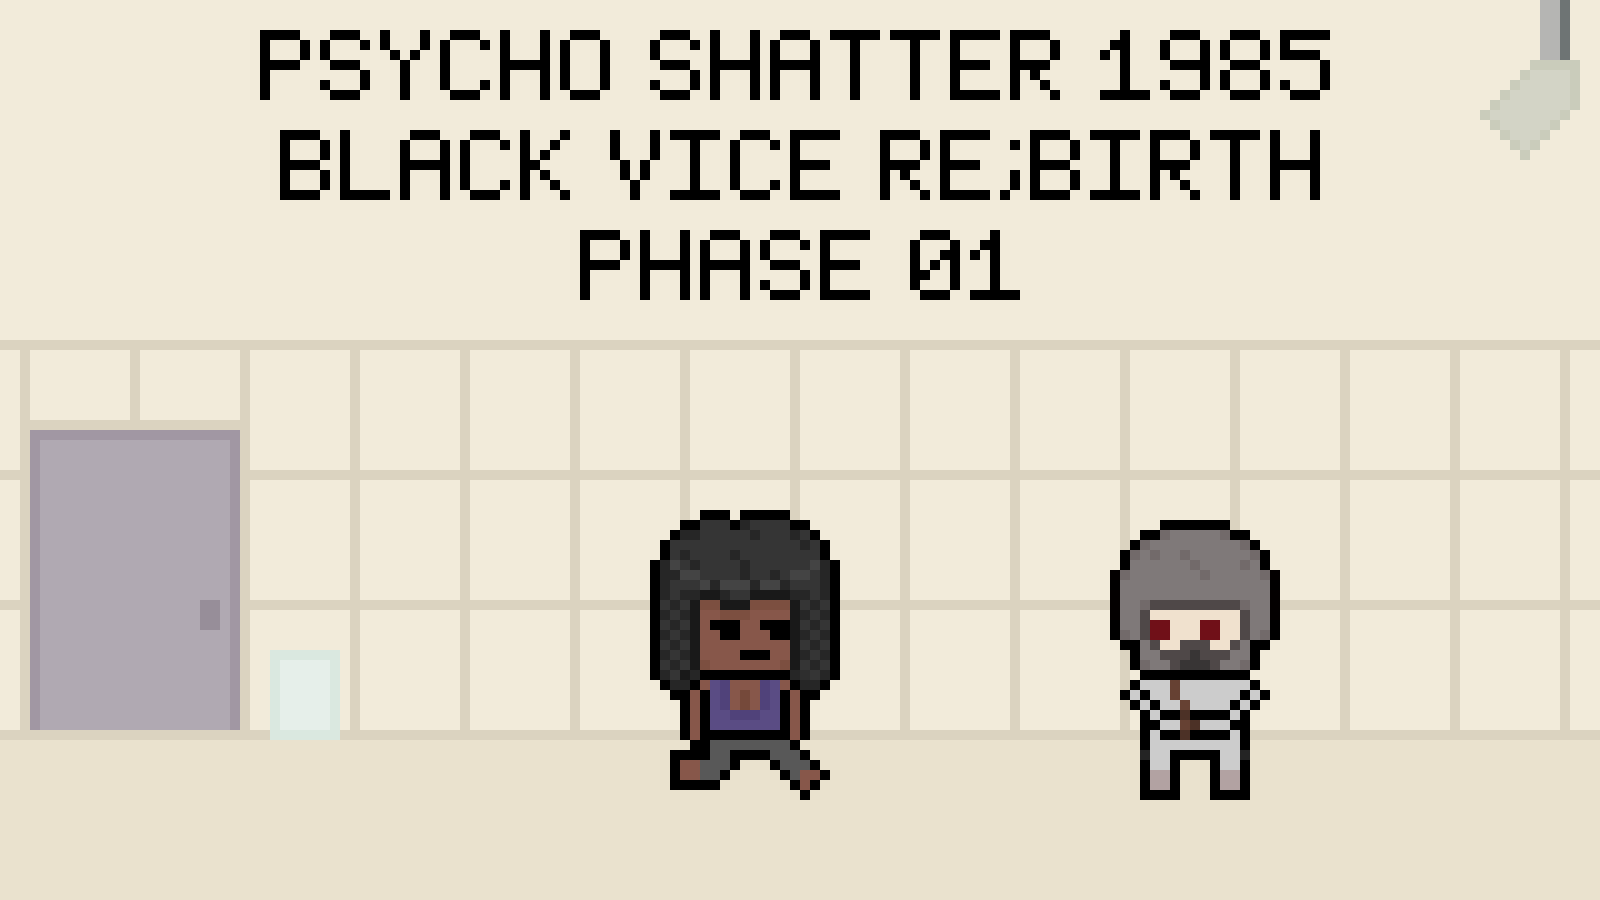 psycho-shatter-1985-black-vice-rebirth-ch-01.png